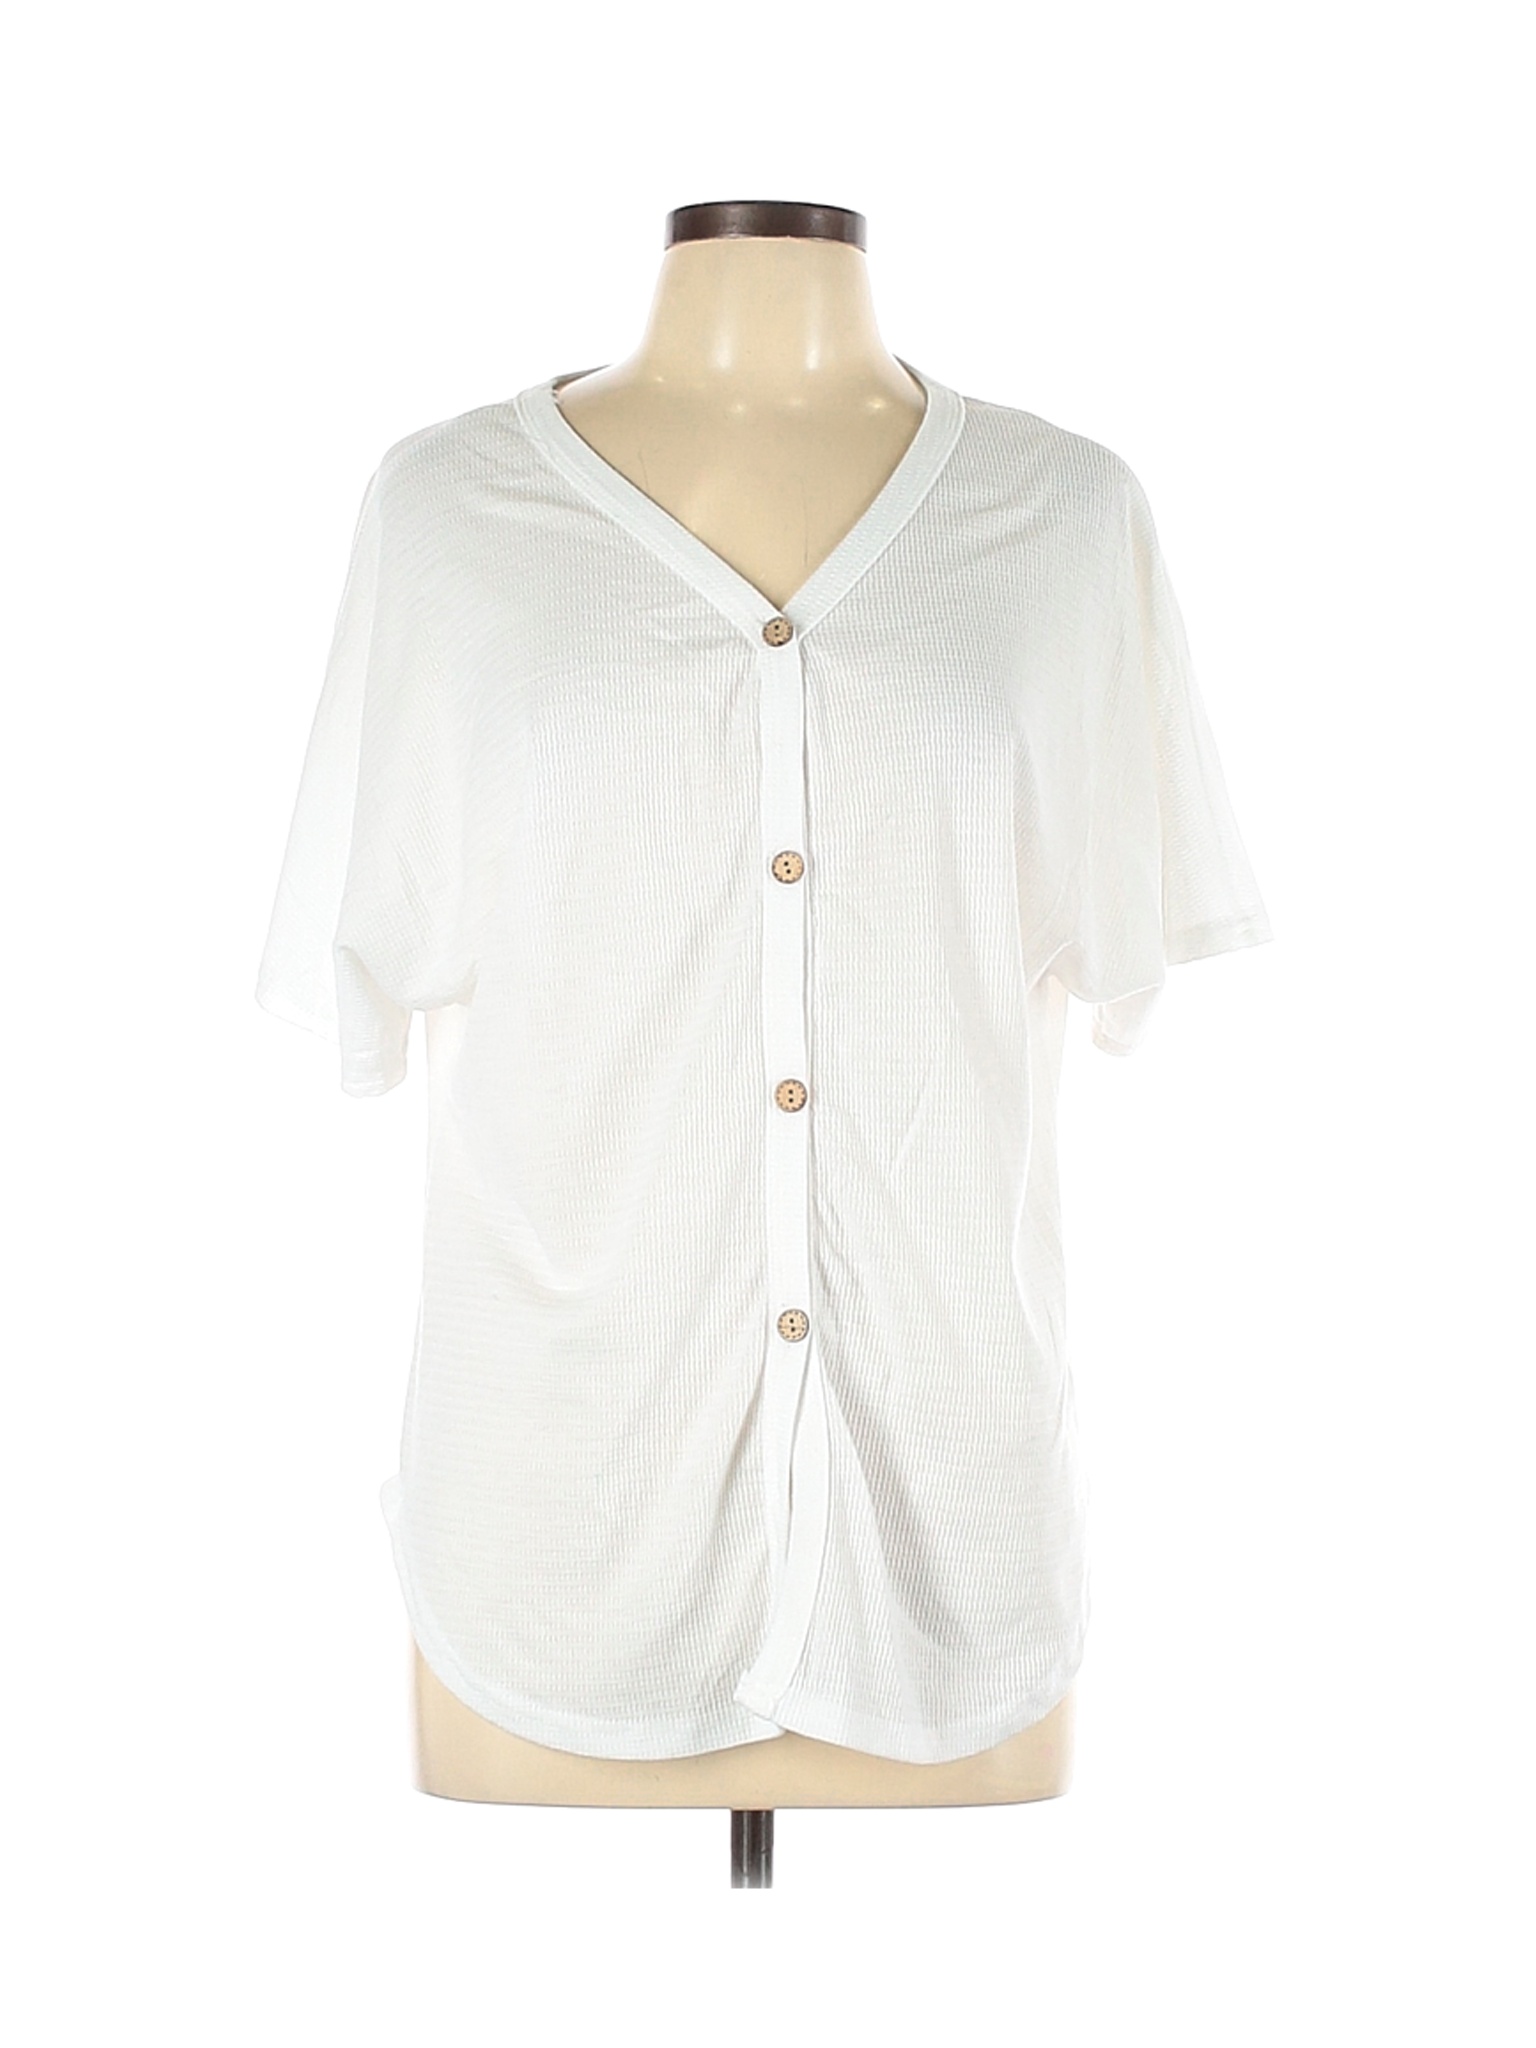 Assorted Brands Women White Short Sleeve Top L | eBay